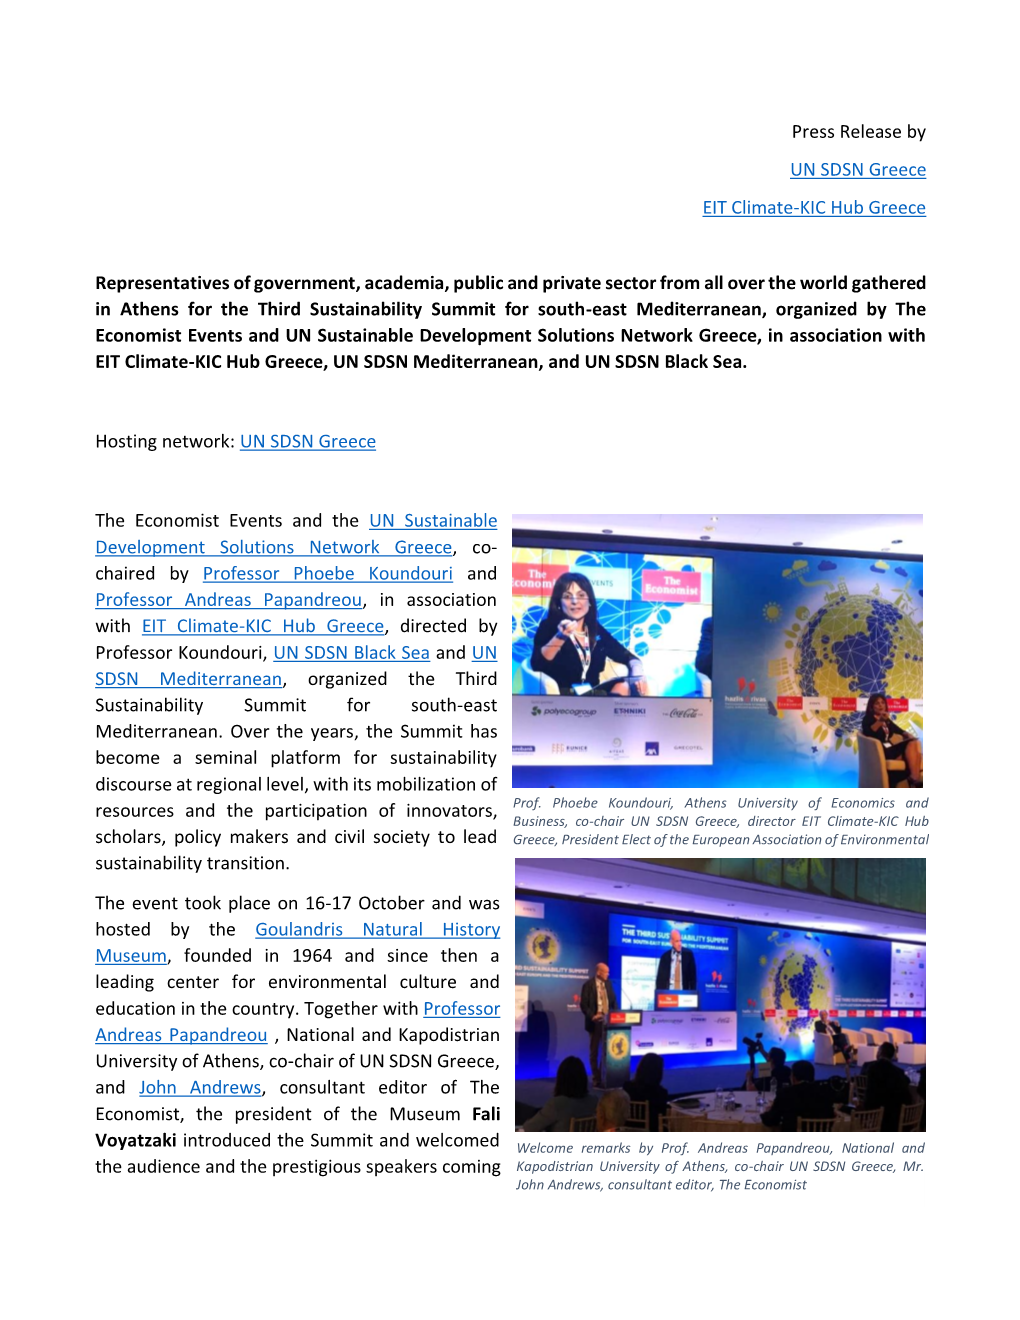 Press Release by UN SDSN Greece EIT Climate-KIC Hub Greece